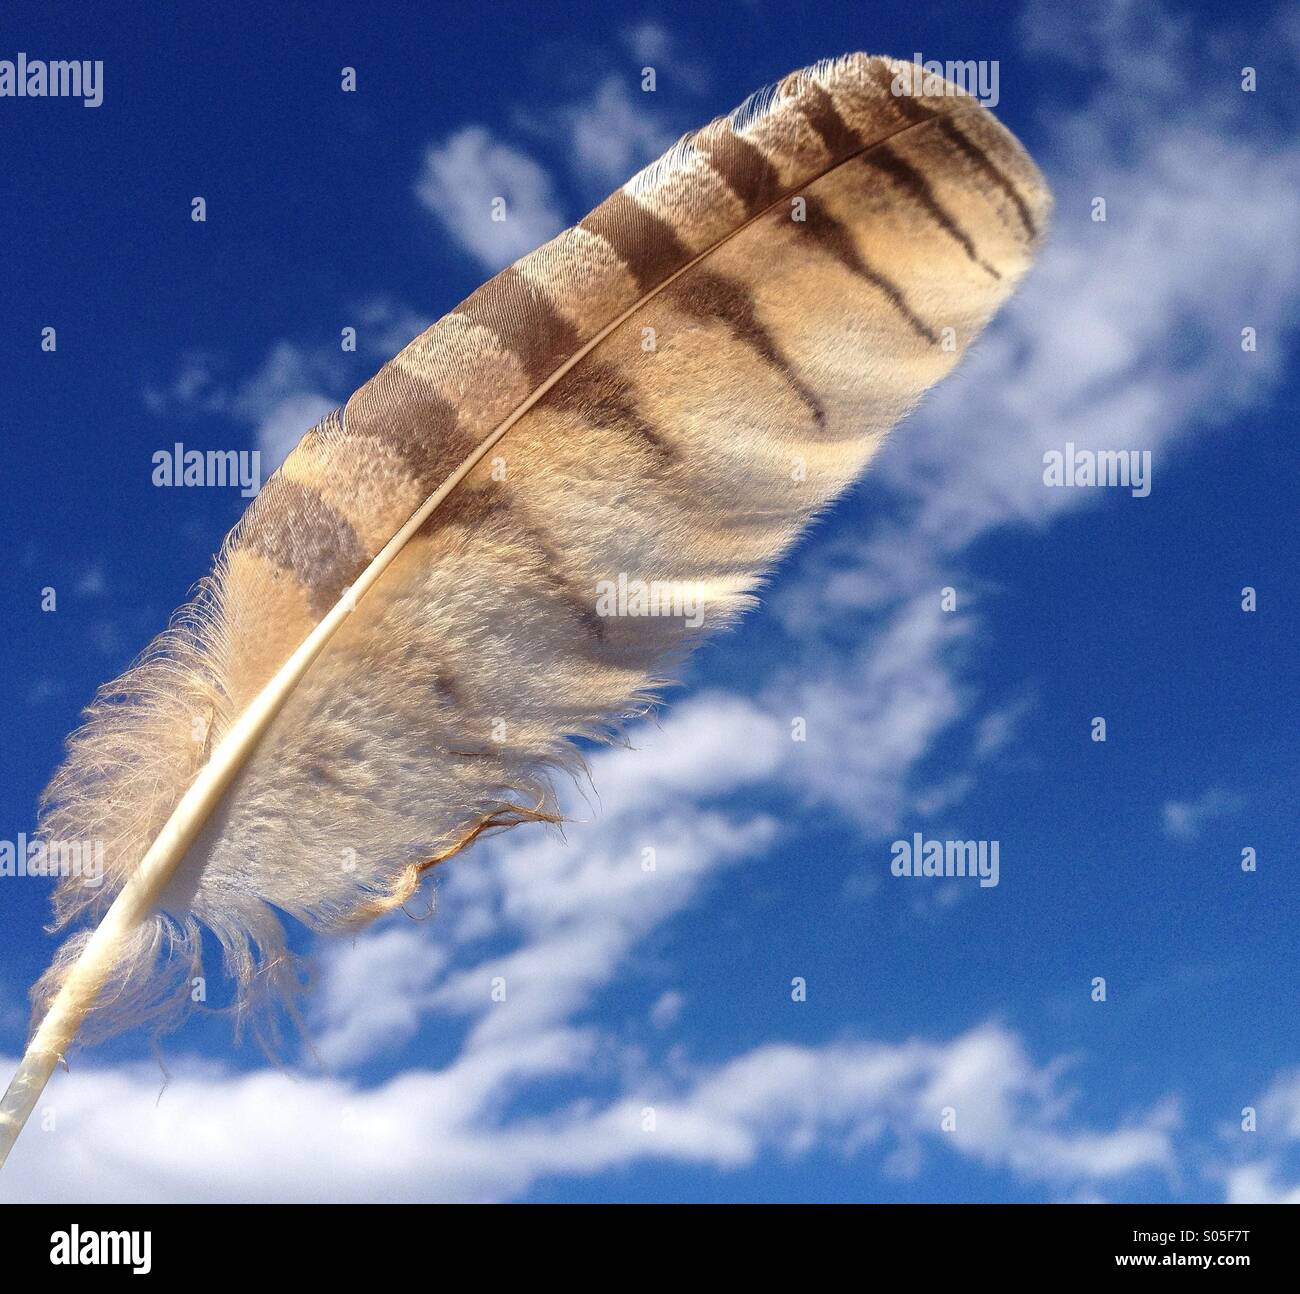 150305 Hawk Feathers Images Stock Photos  Vectors  Shutterstock